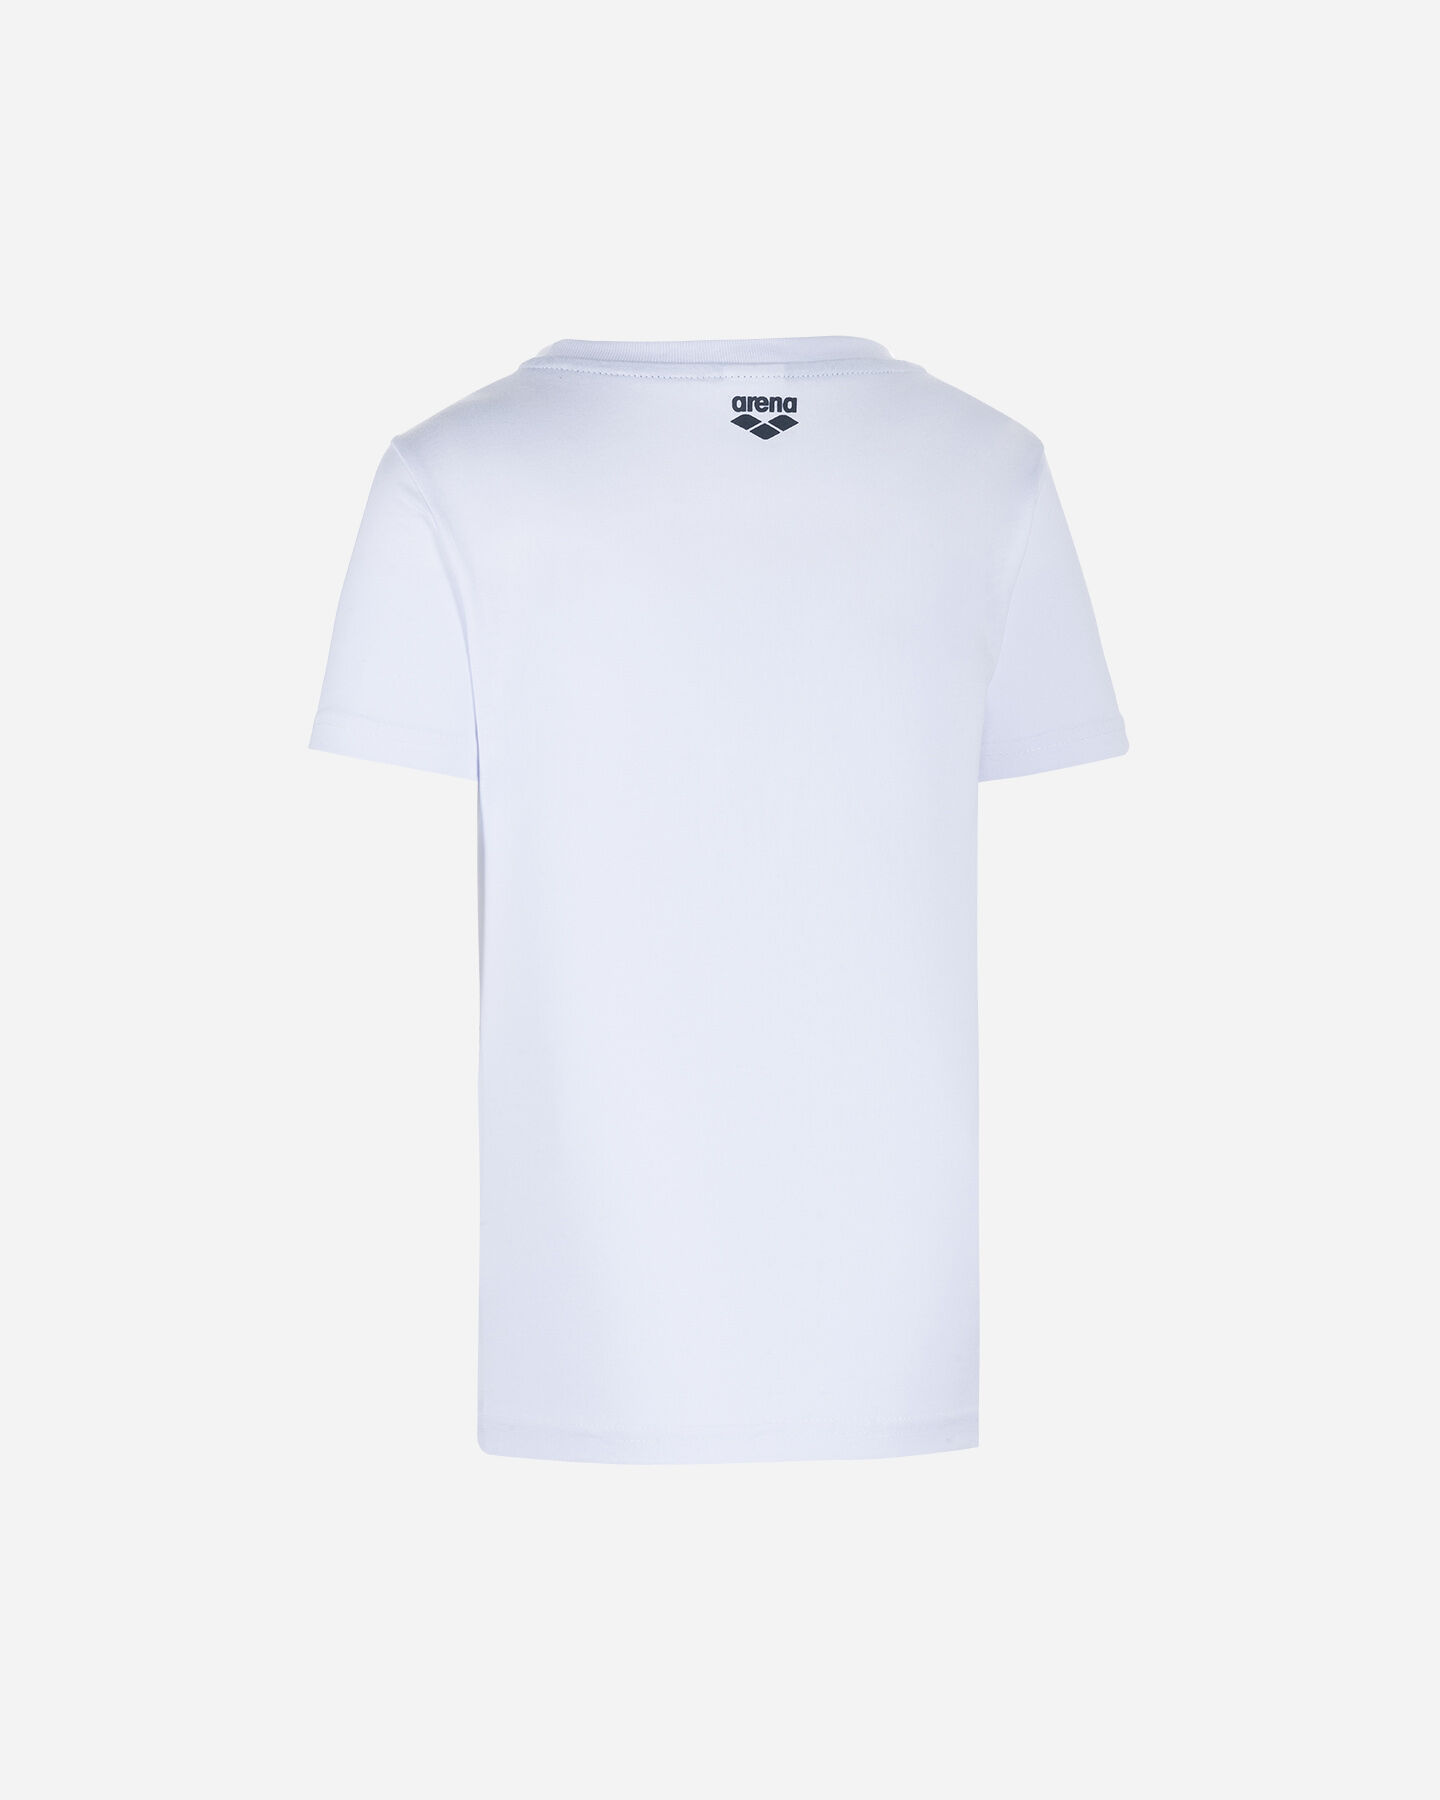  T-Shirt ARENA PORTALOG JR S4075101|001|4A scatto 1